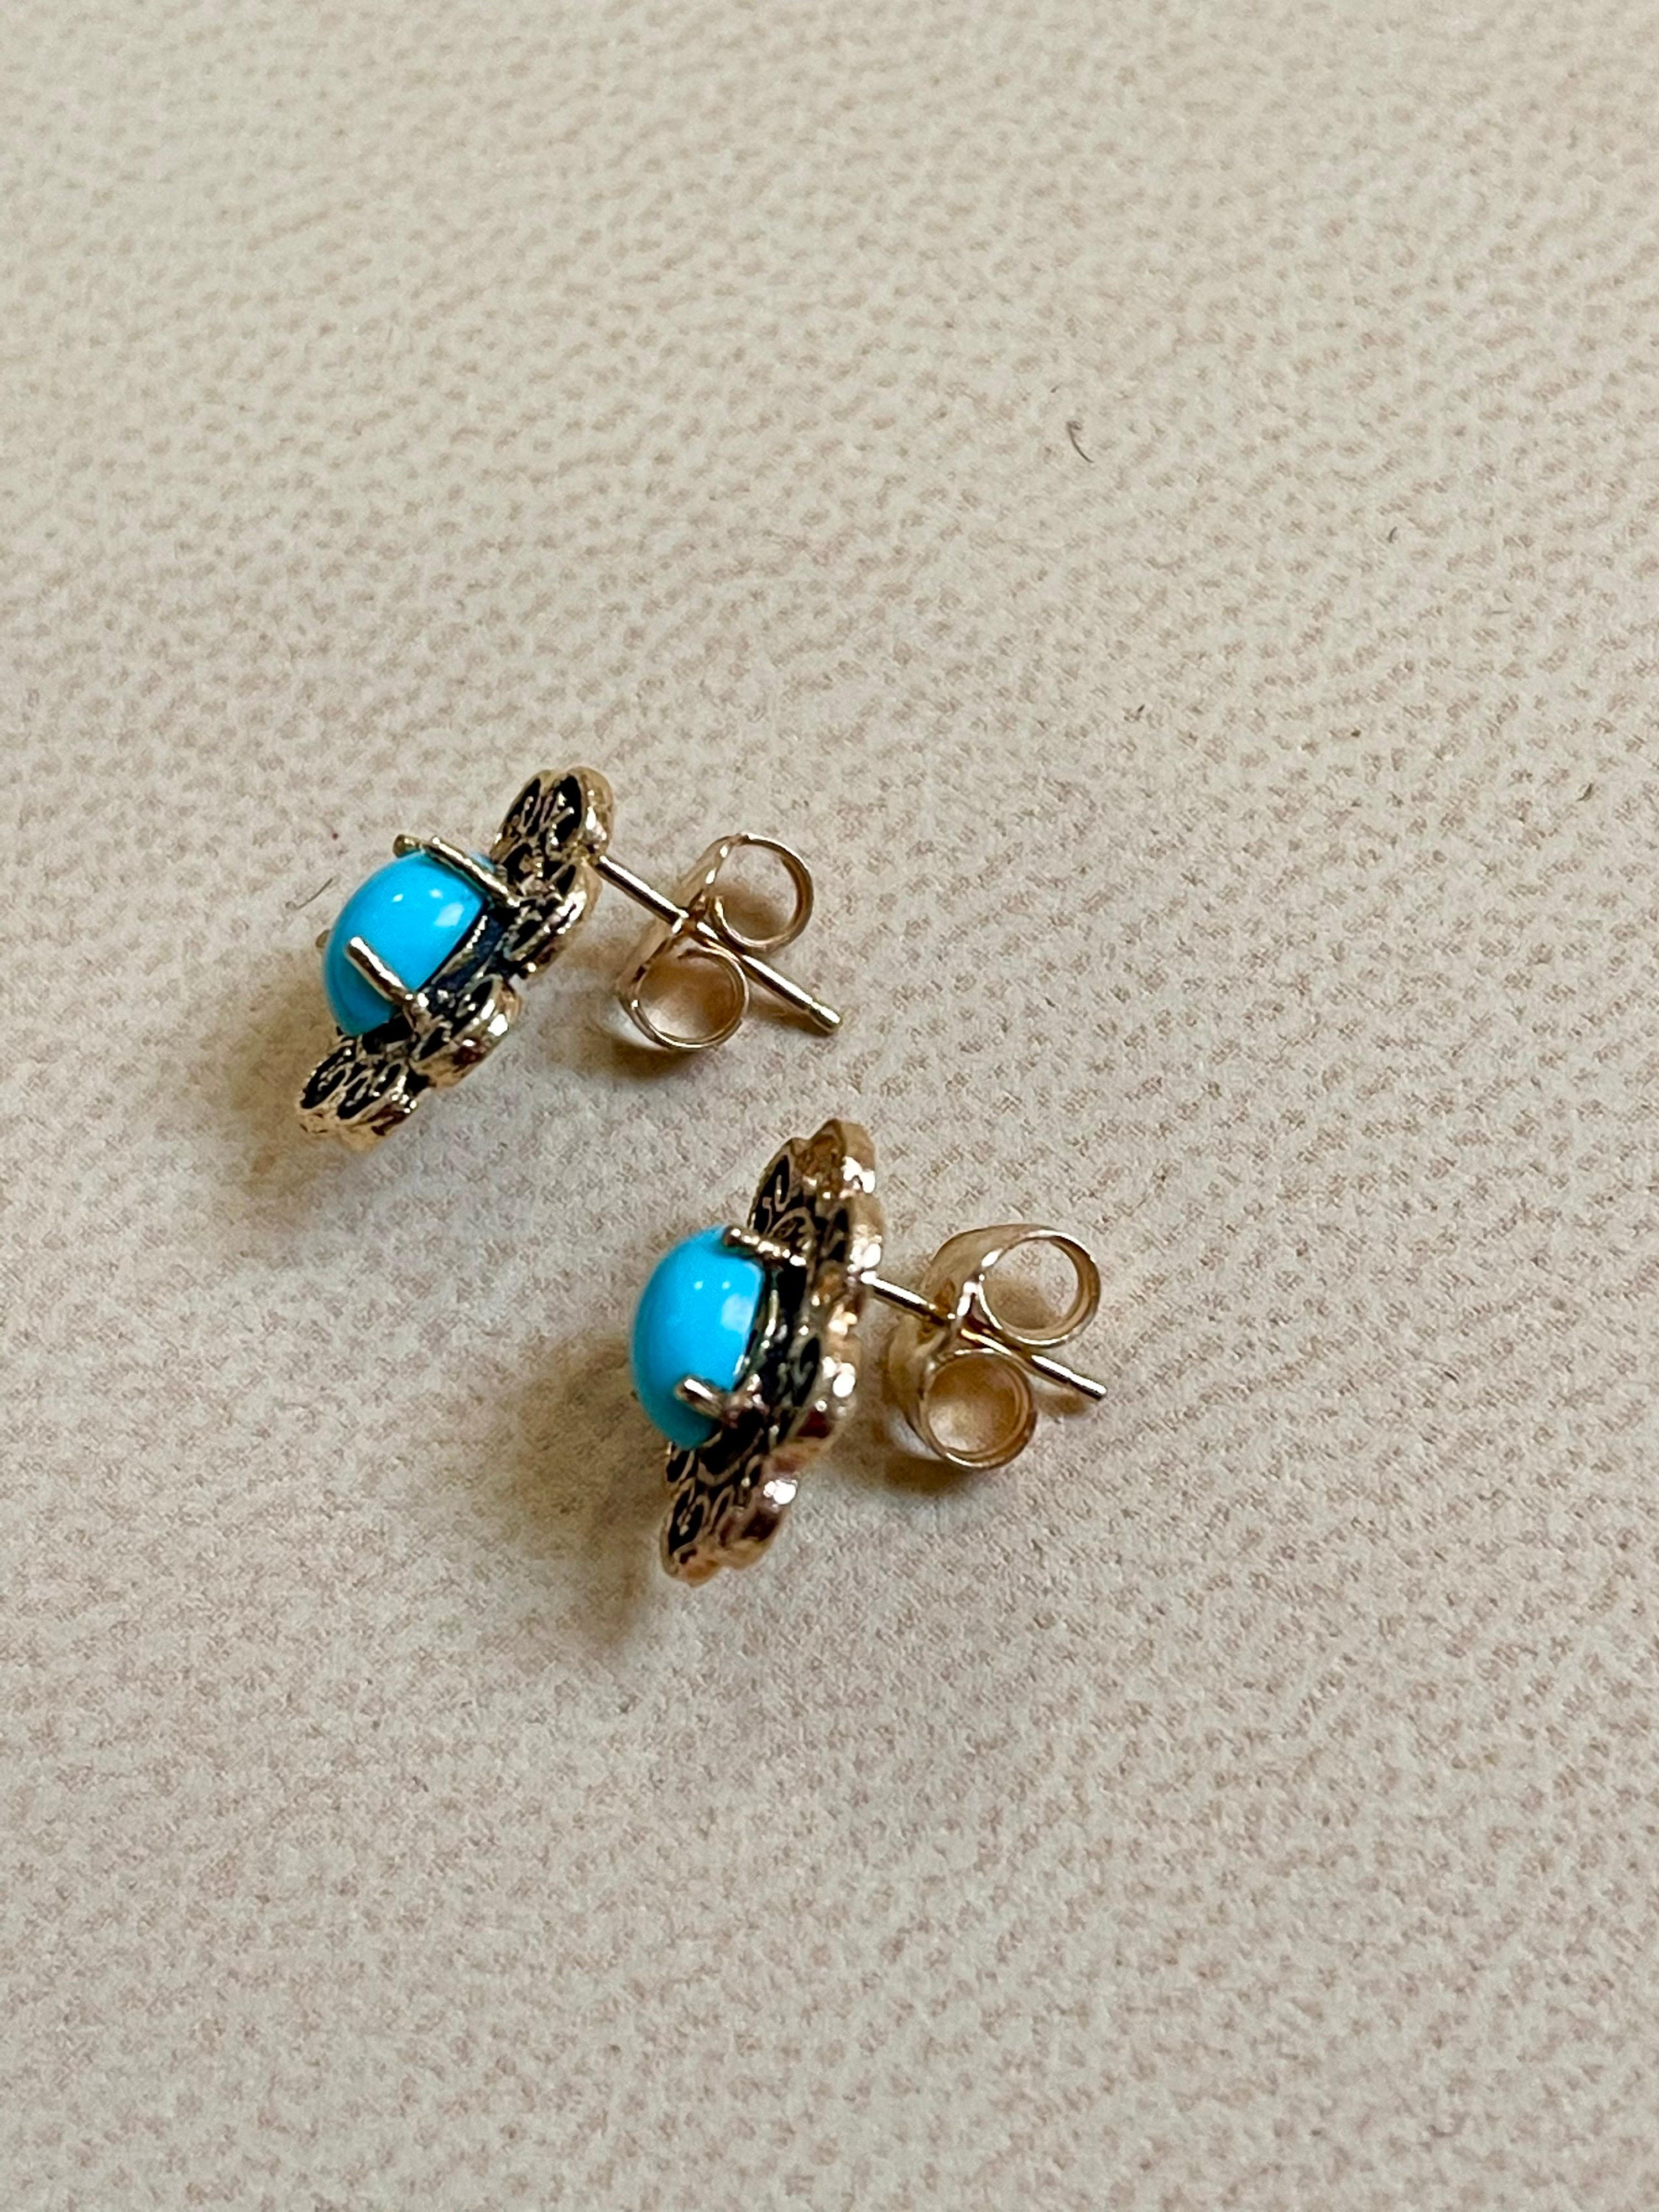 1 Carat Turquoise 14 Karat Yellow Gold Earrings, Stud Post Earring, Vintage 1